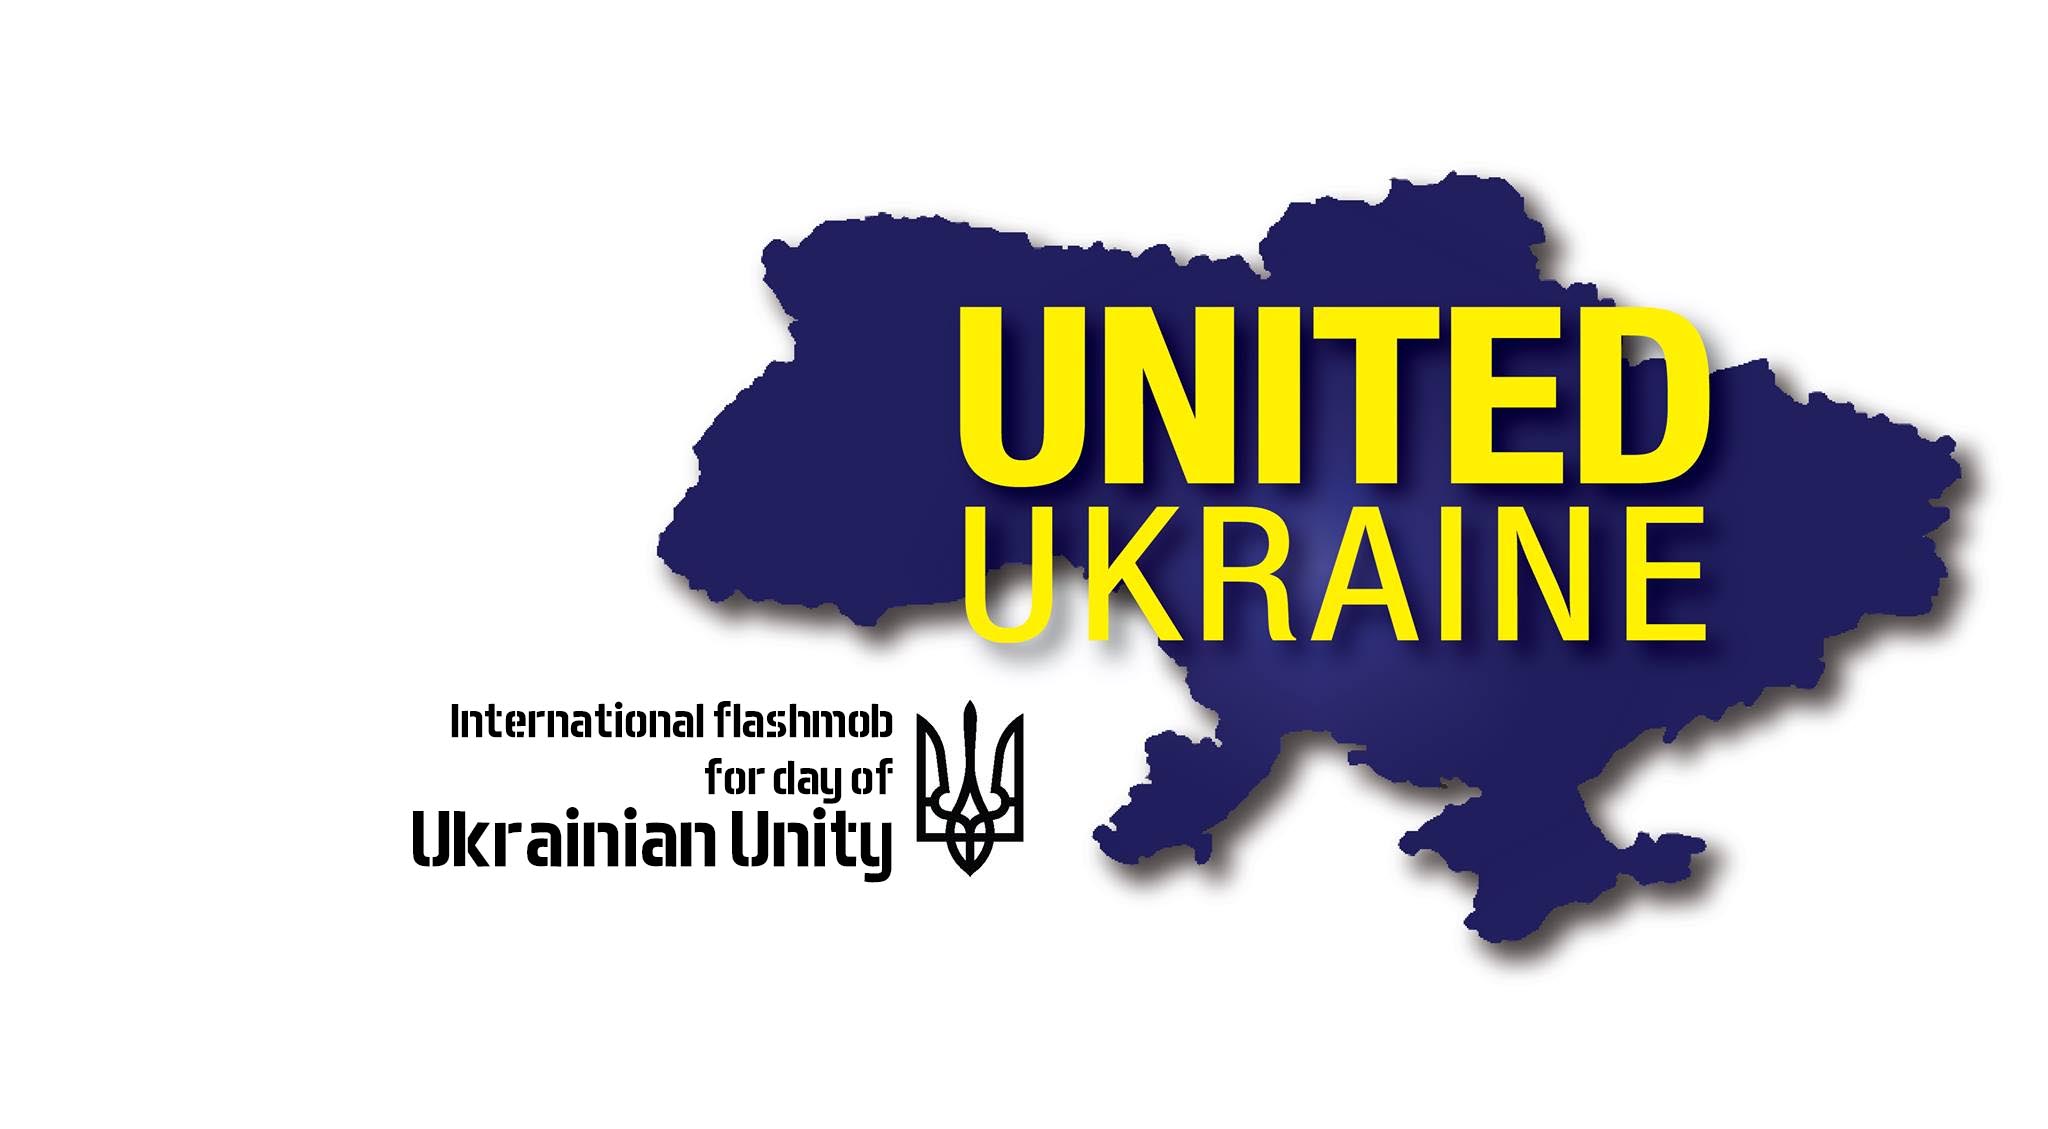 Ukrainians worldwide to mark Act of Unity on January 22 with flashmob